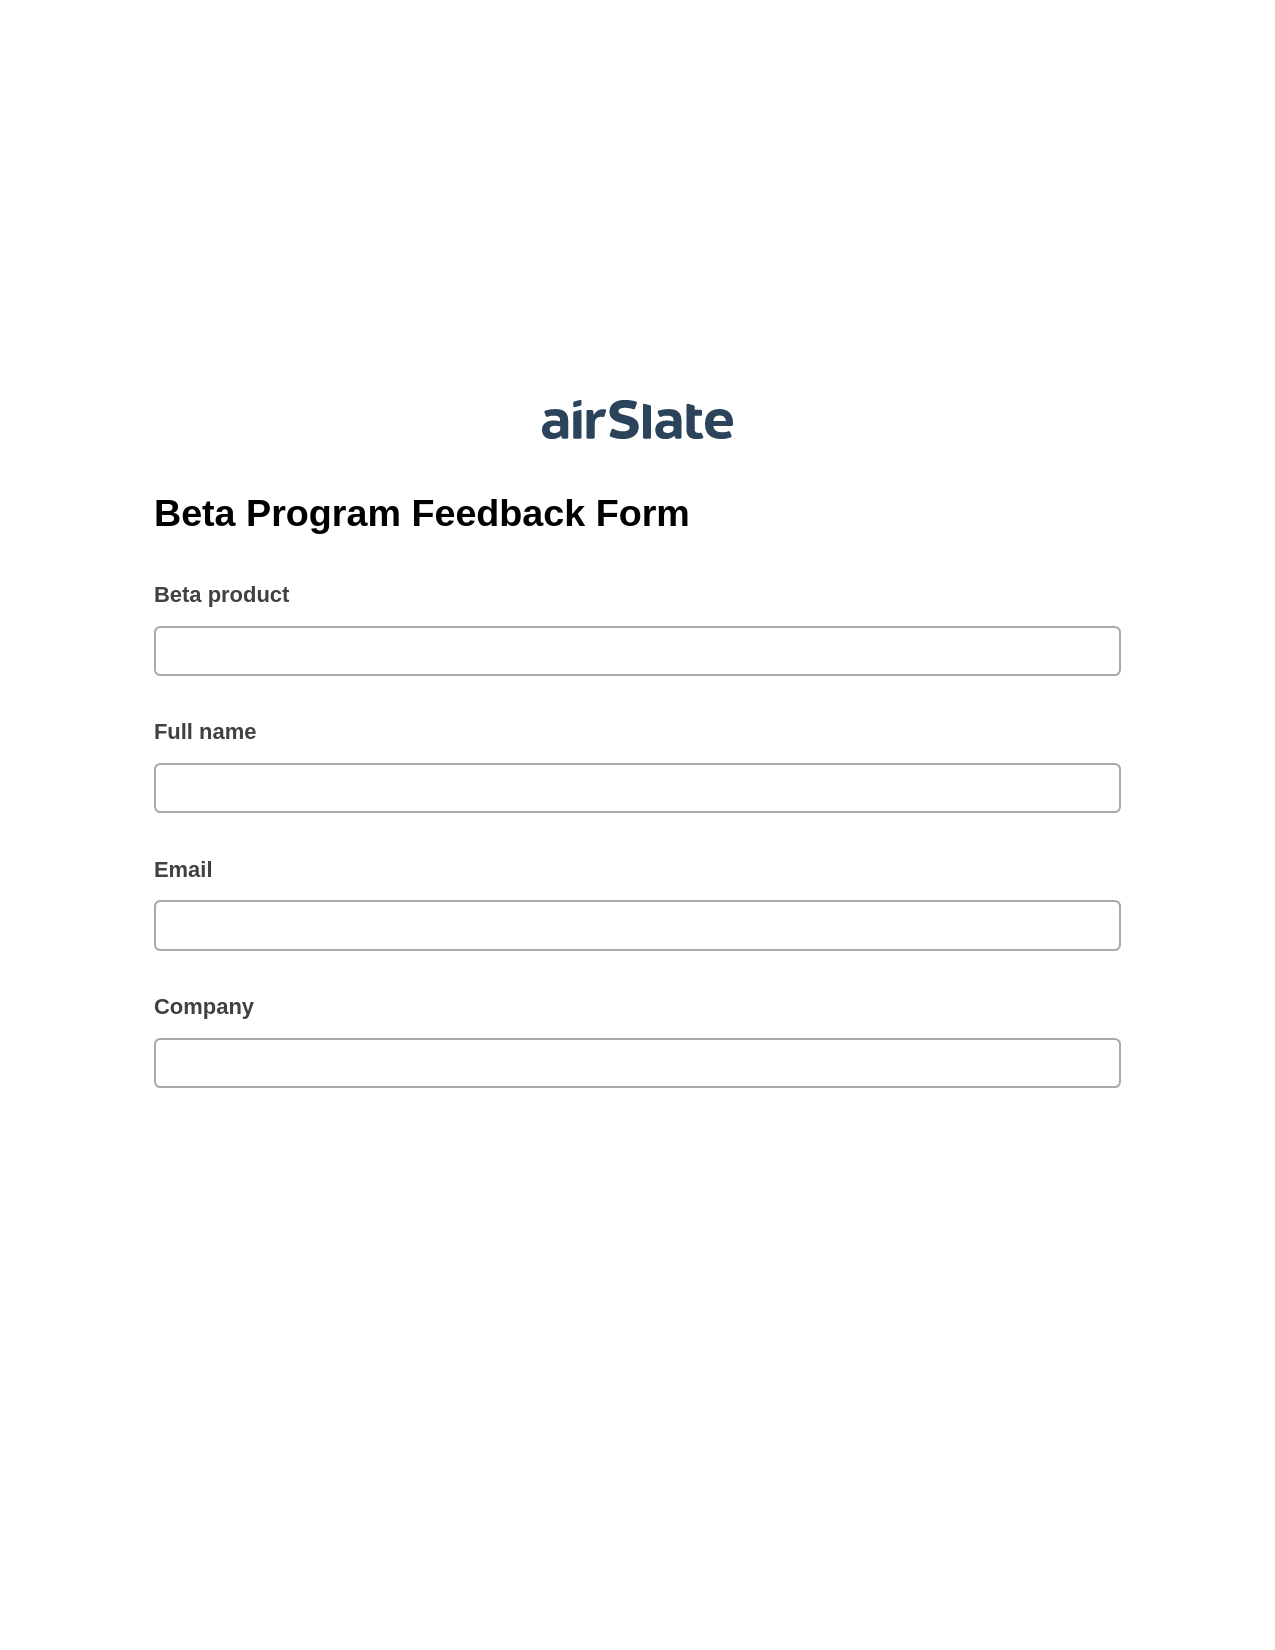 Beta Program Feedback Form Pre-fill from Salesforce Record Bot, Update Salesforce Record Bot, Post-finish Document Bot